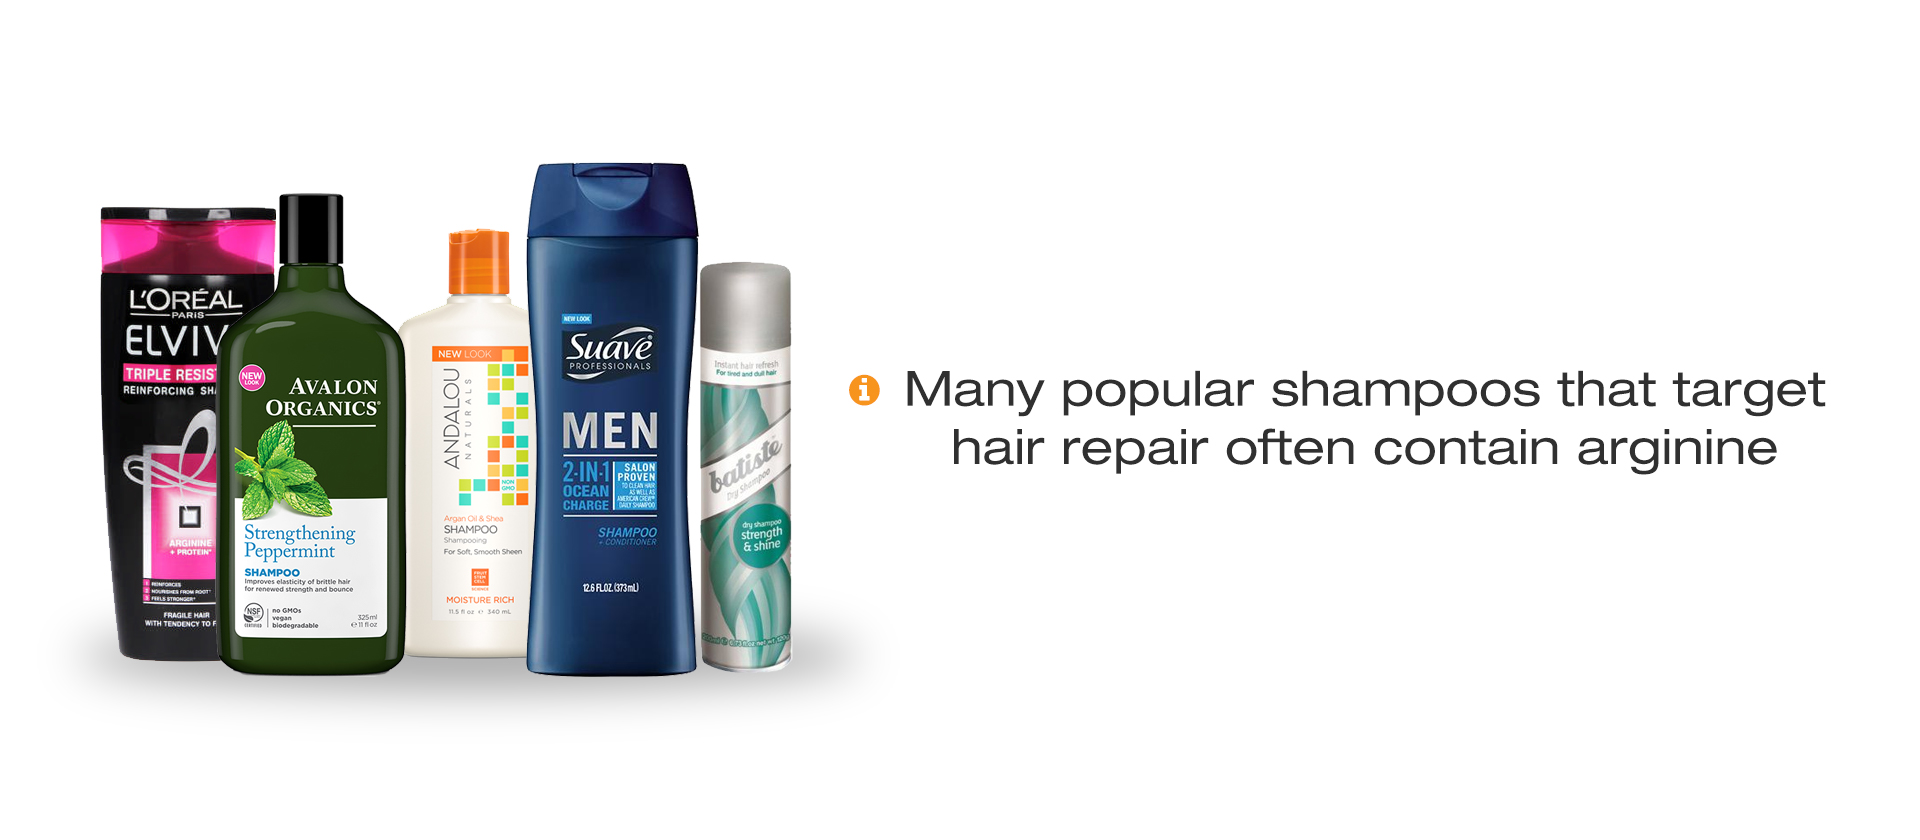 Many popular shampoos that target hair repair contain arginine and may help with seborrheic dermatitis